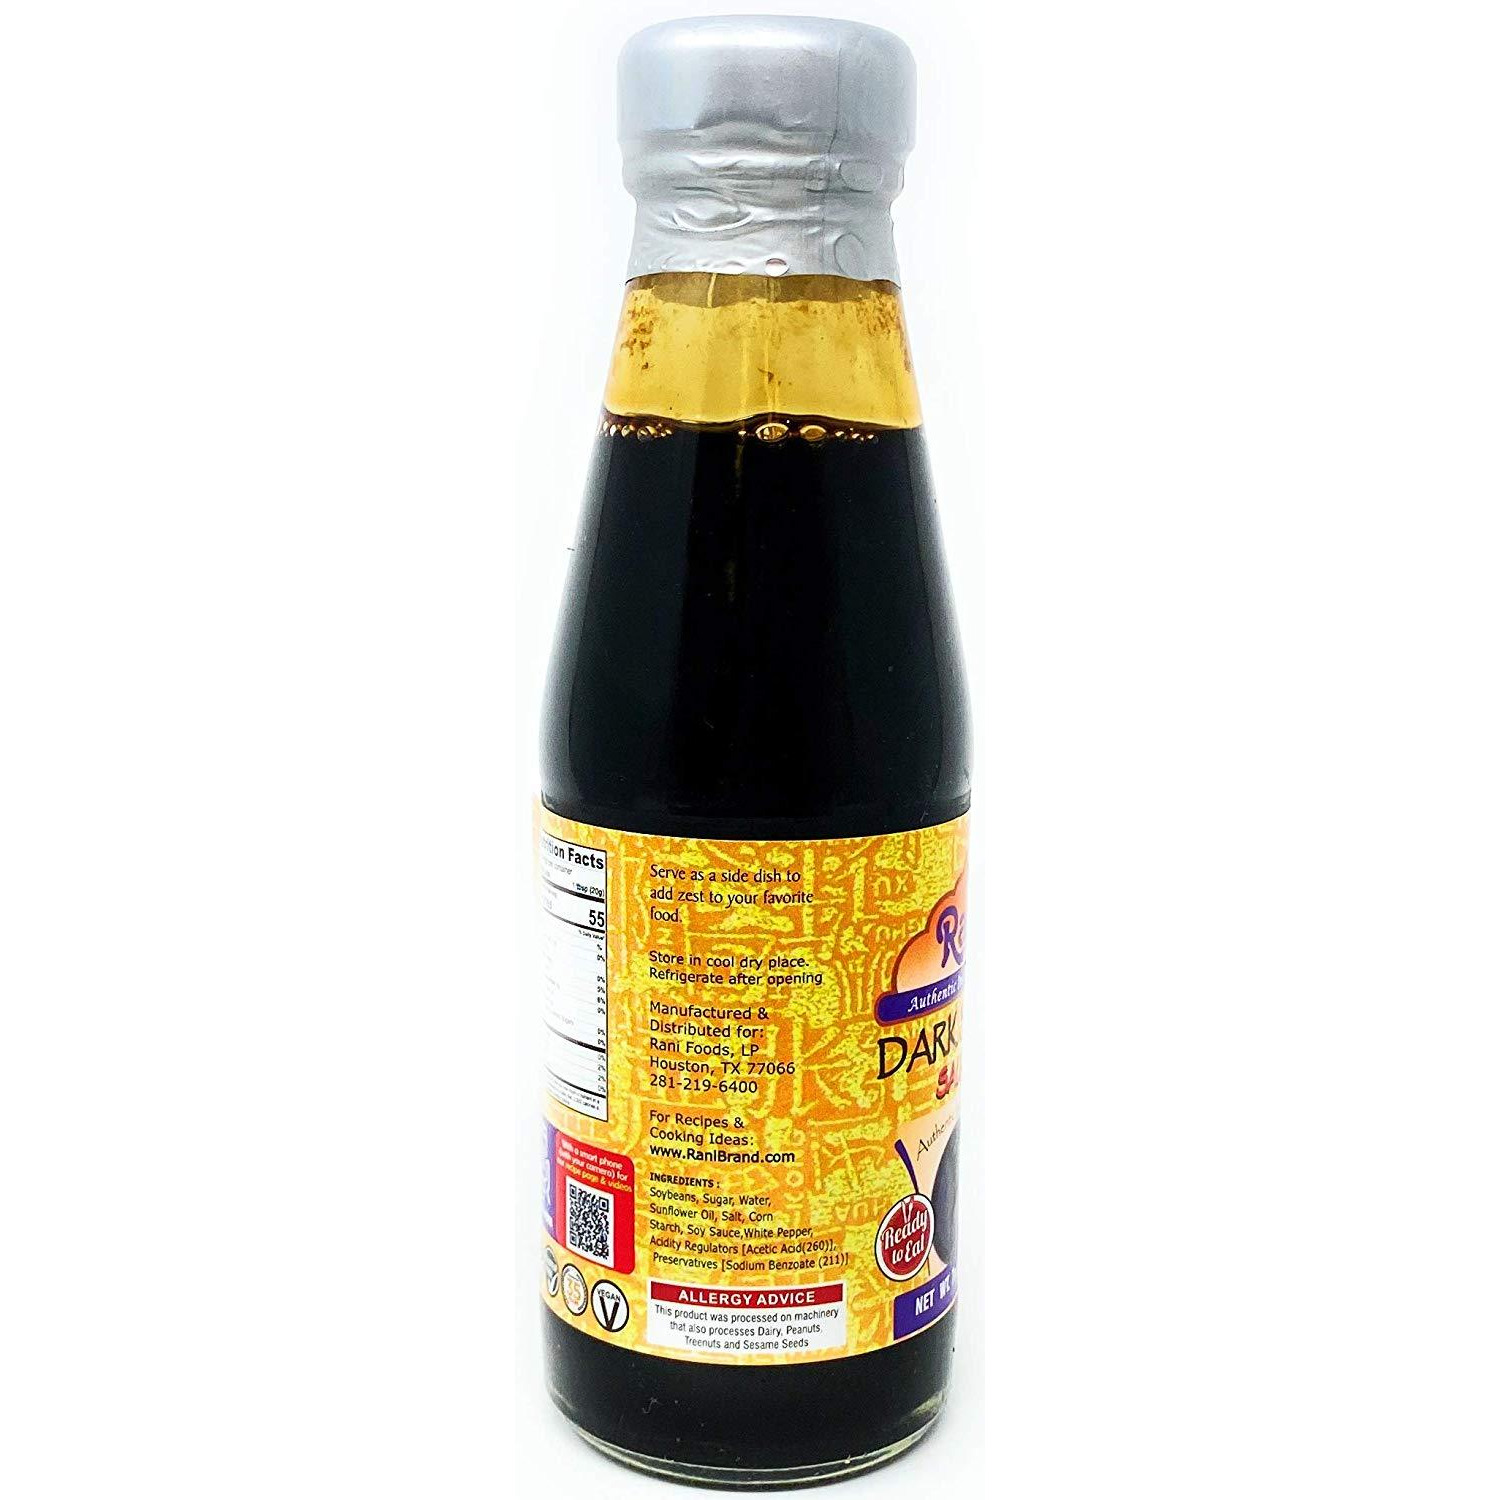 Rani Dark Soya Sauce 7oz (200g) Glass Jar ~ No Colors | NON-GMO | Vegan | Gluten Friendly | Indian Origin